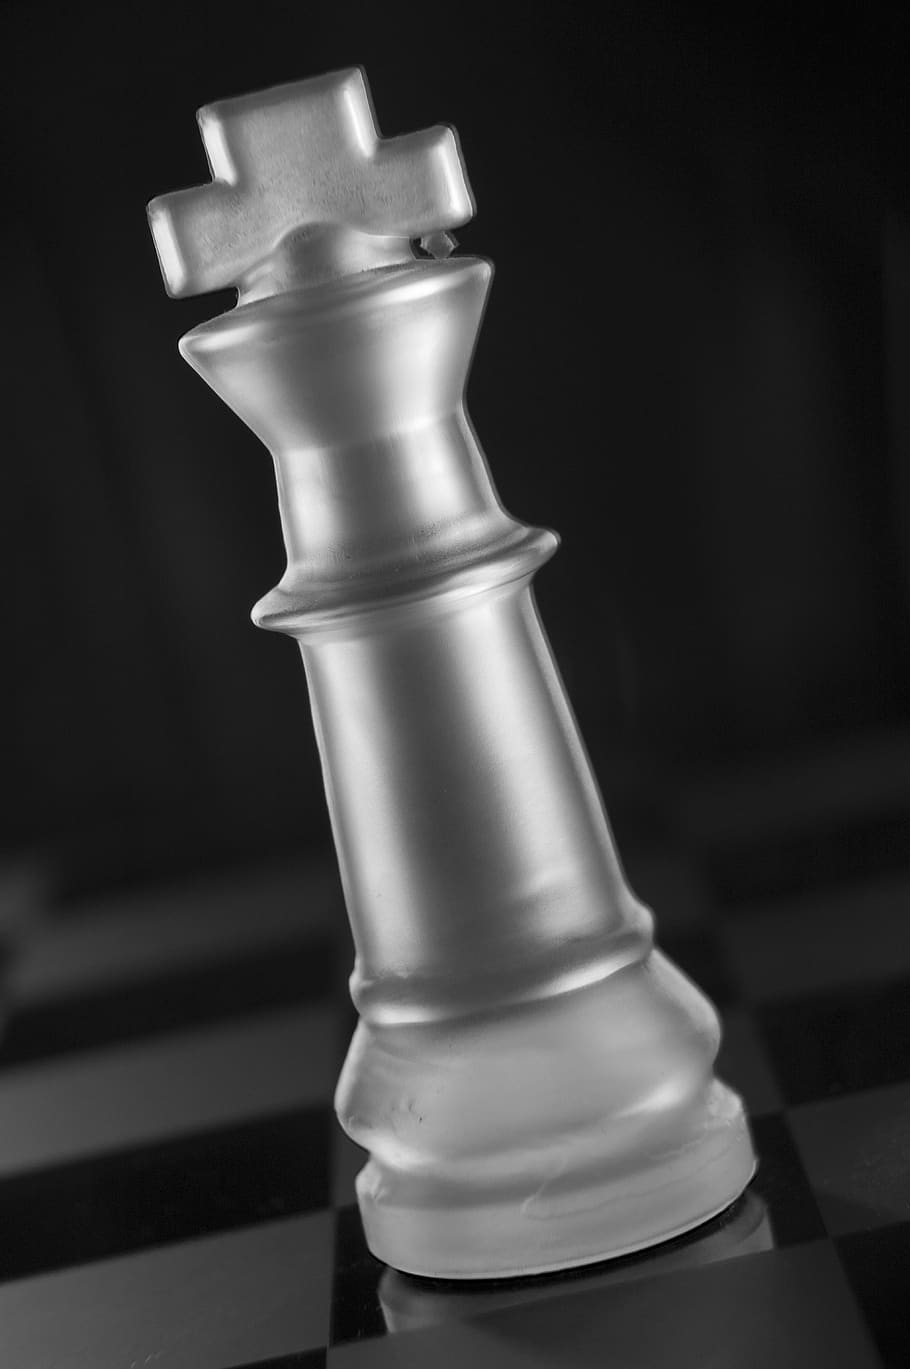 xadrez, vitória, xeque-mate, rei, tabuleiro de xadrez, estratégia, coroa, peça de xadrez, jogo, jogo de tabuleiro